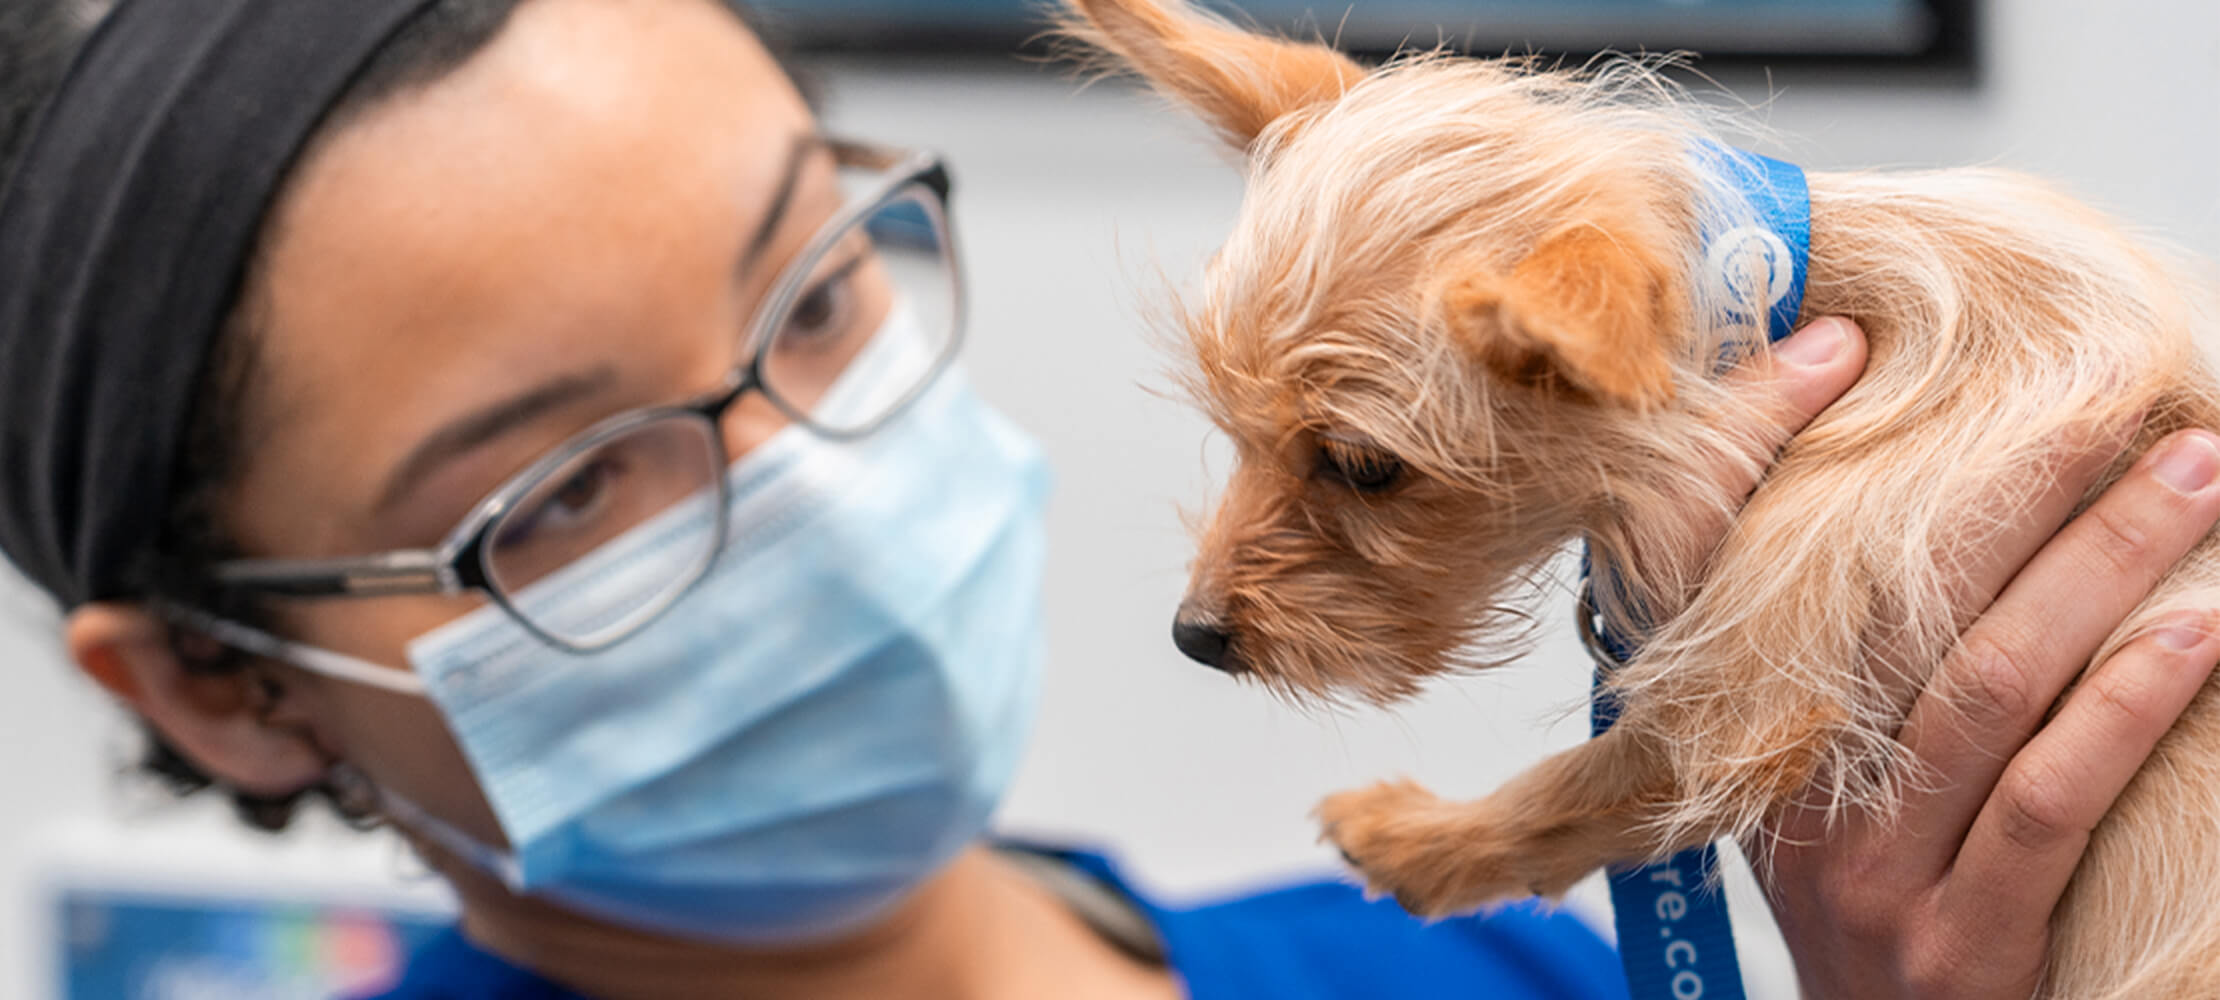 Pet Empire Veterinary Clinic and Wellness Center - Videos